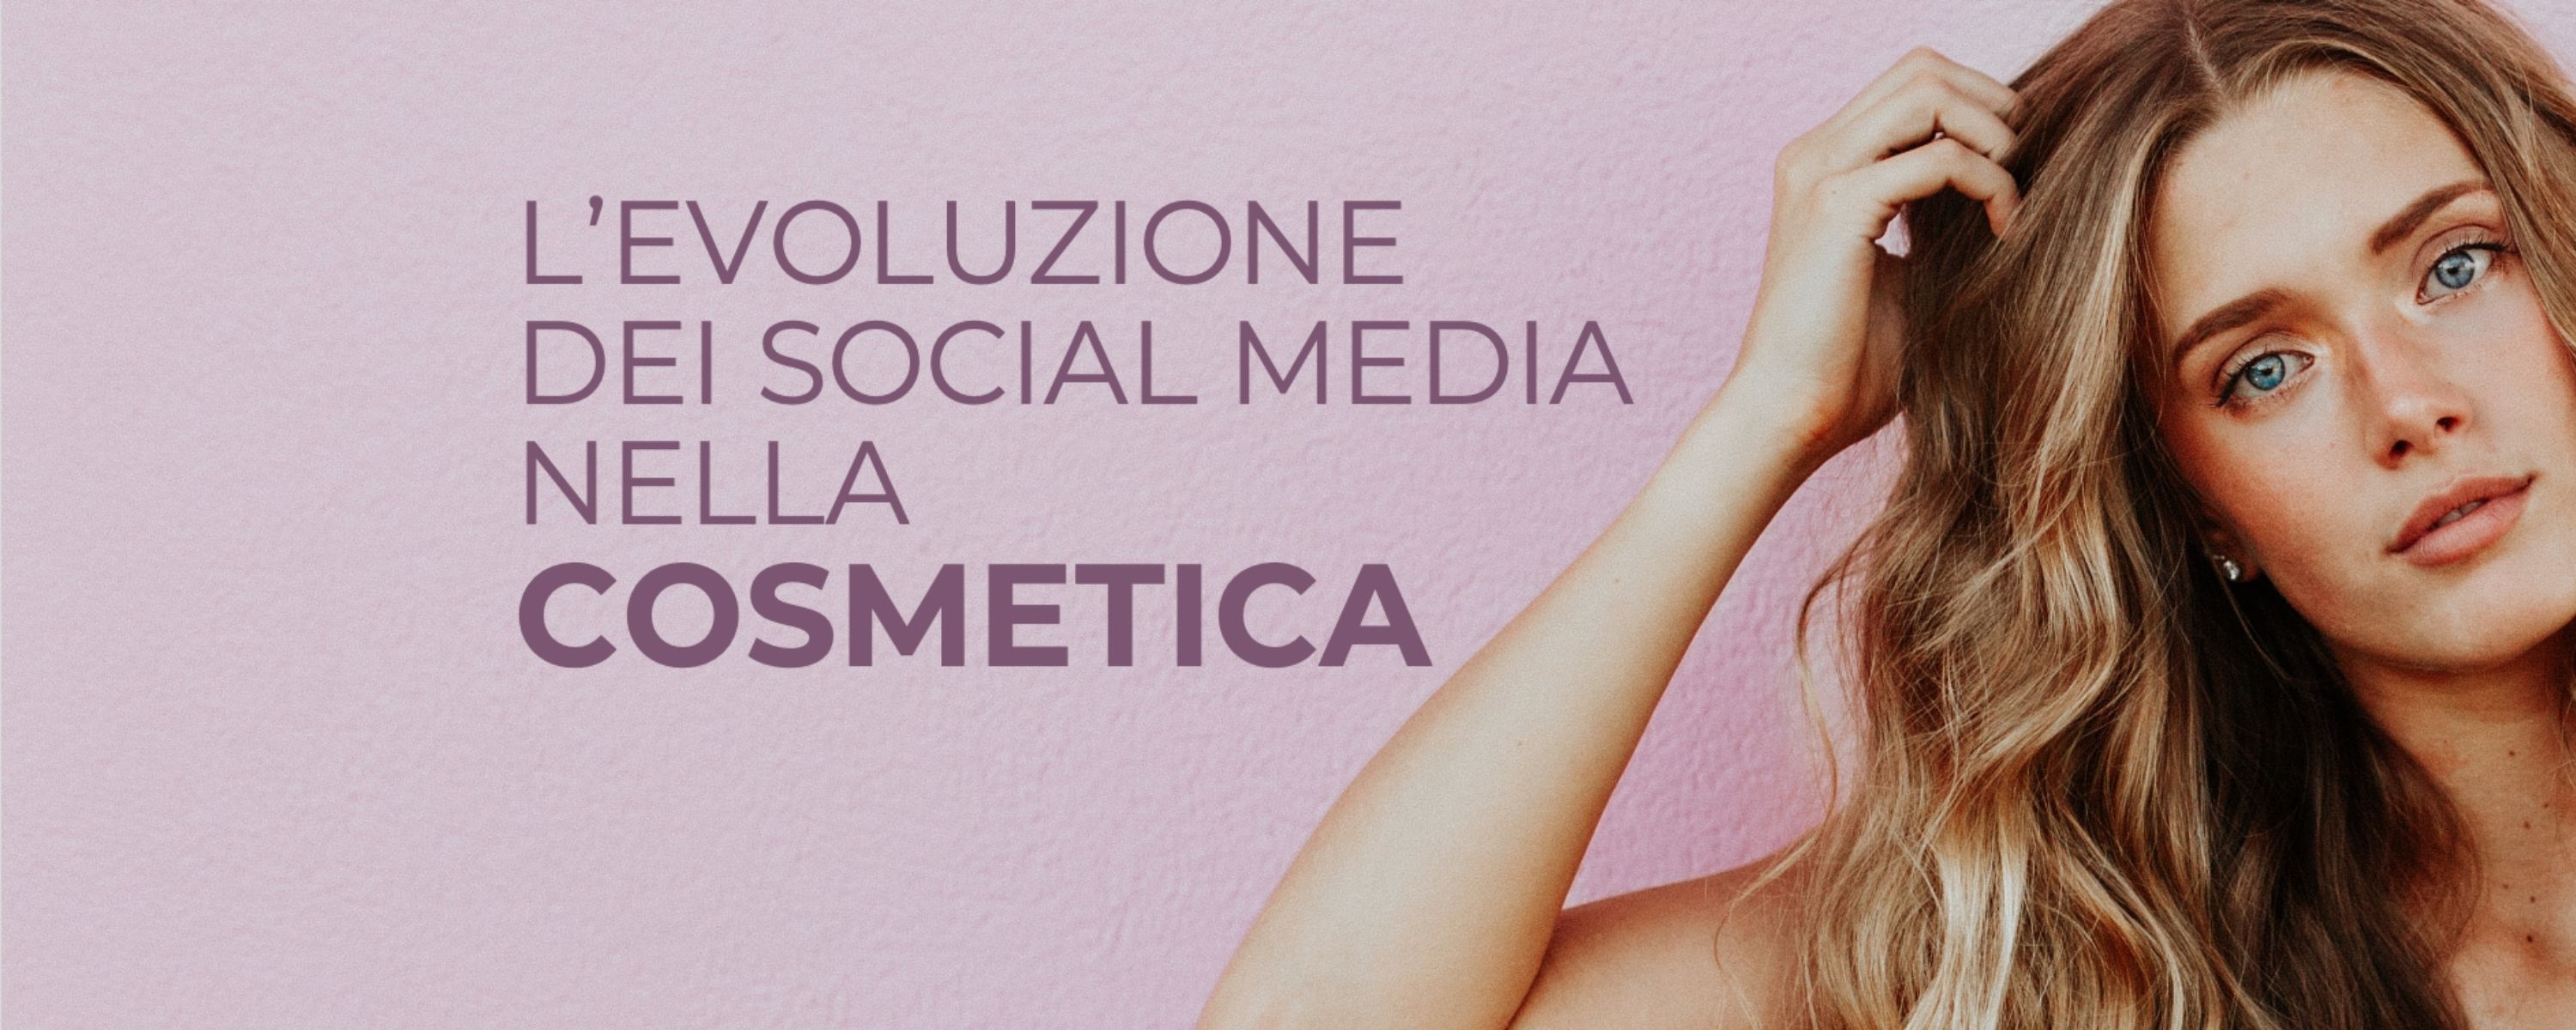 Cosmetica Social Media